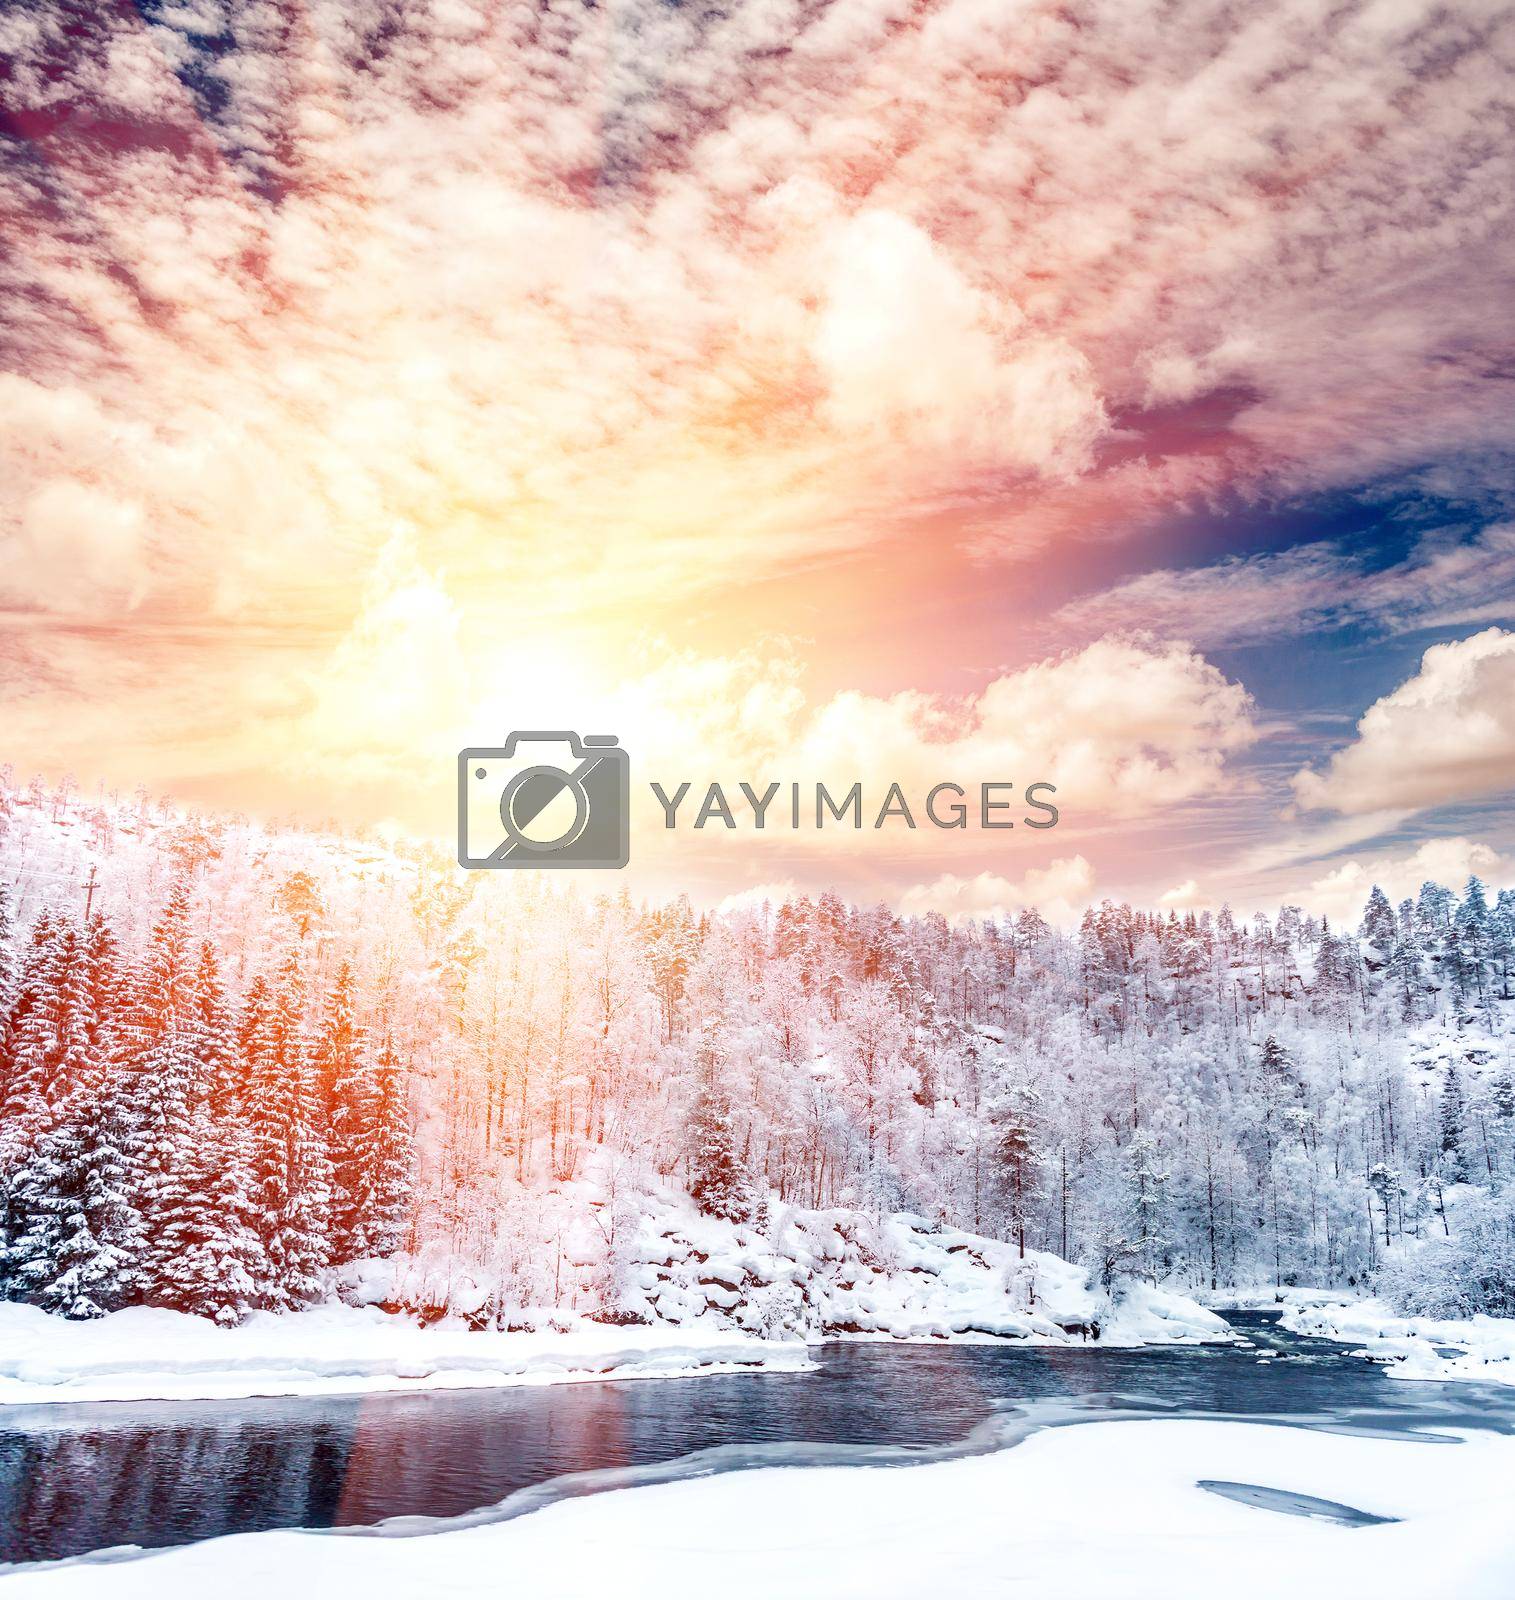 Royalty free image of Sunshine winter landscape by tan4ikk1